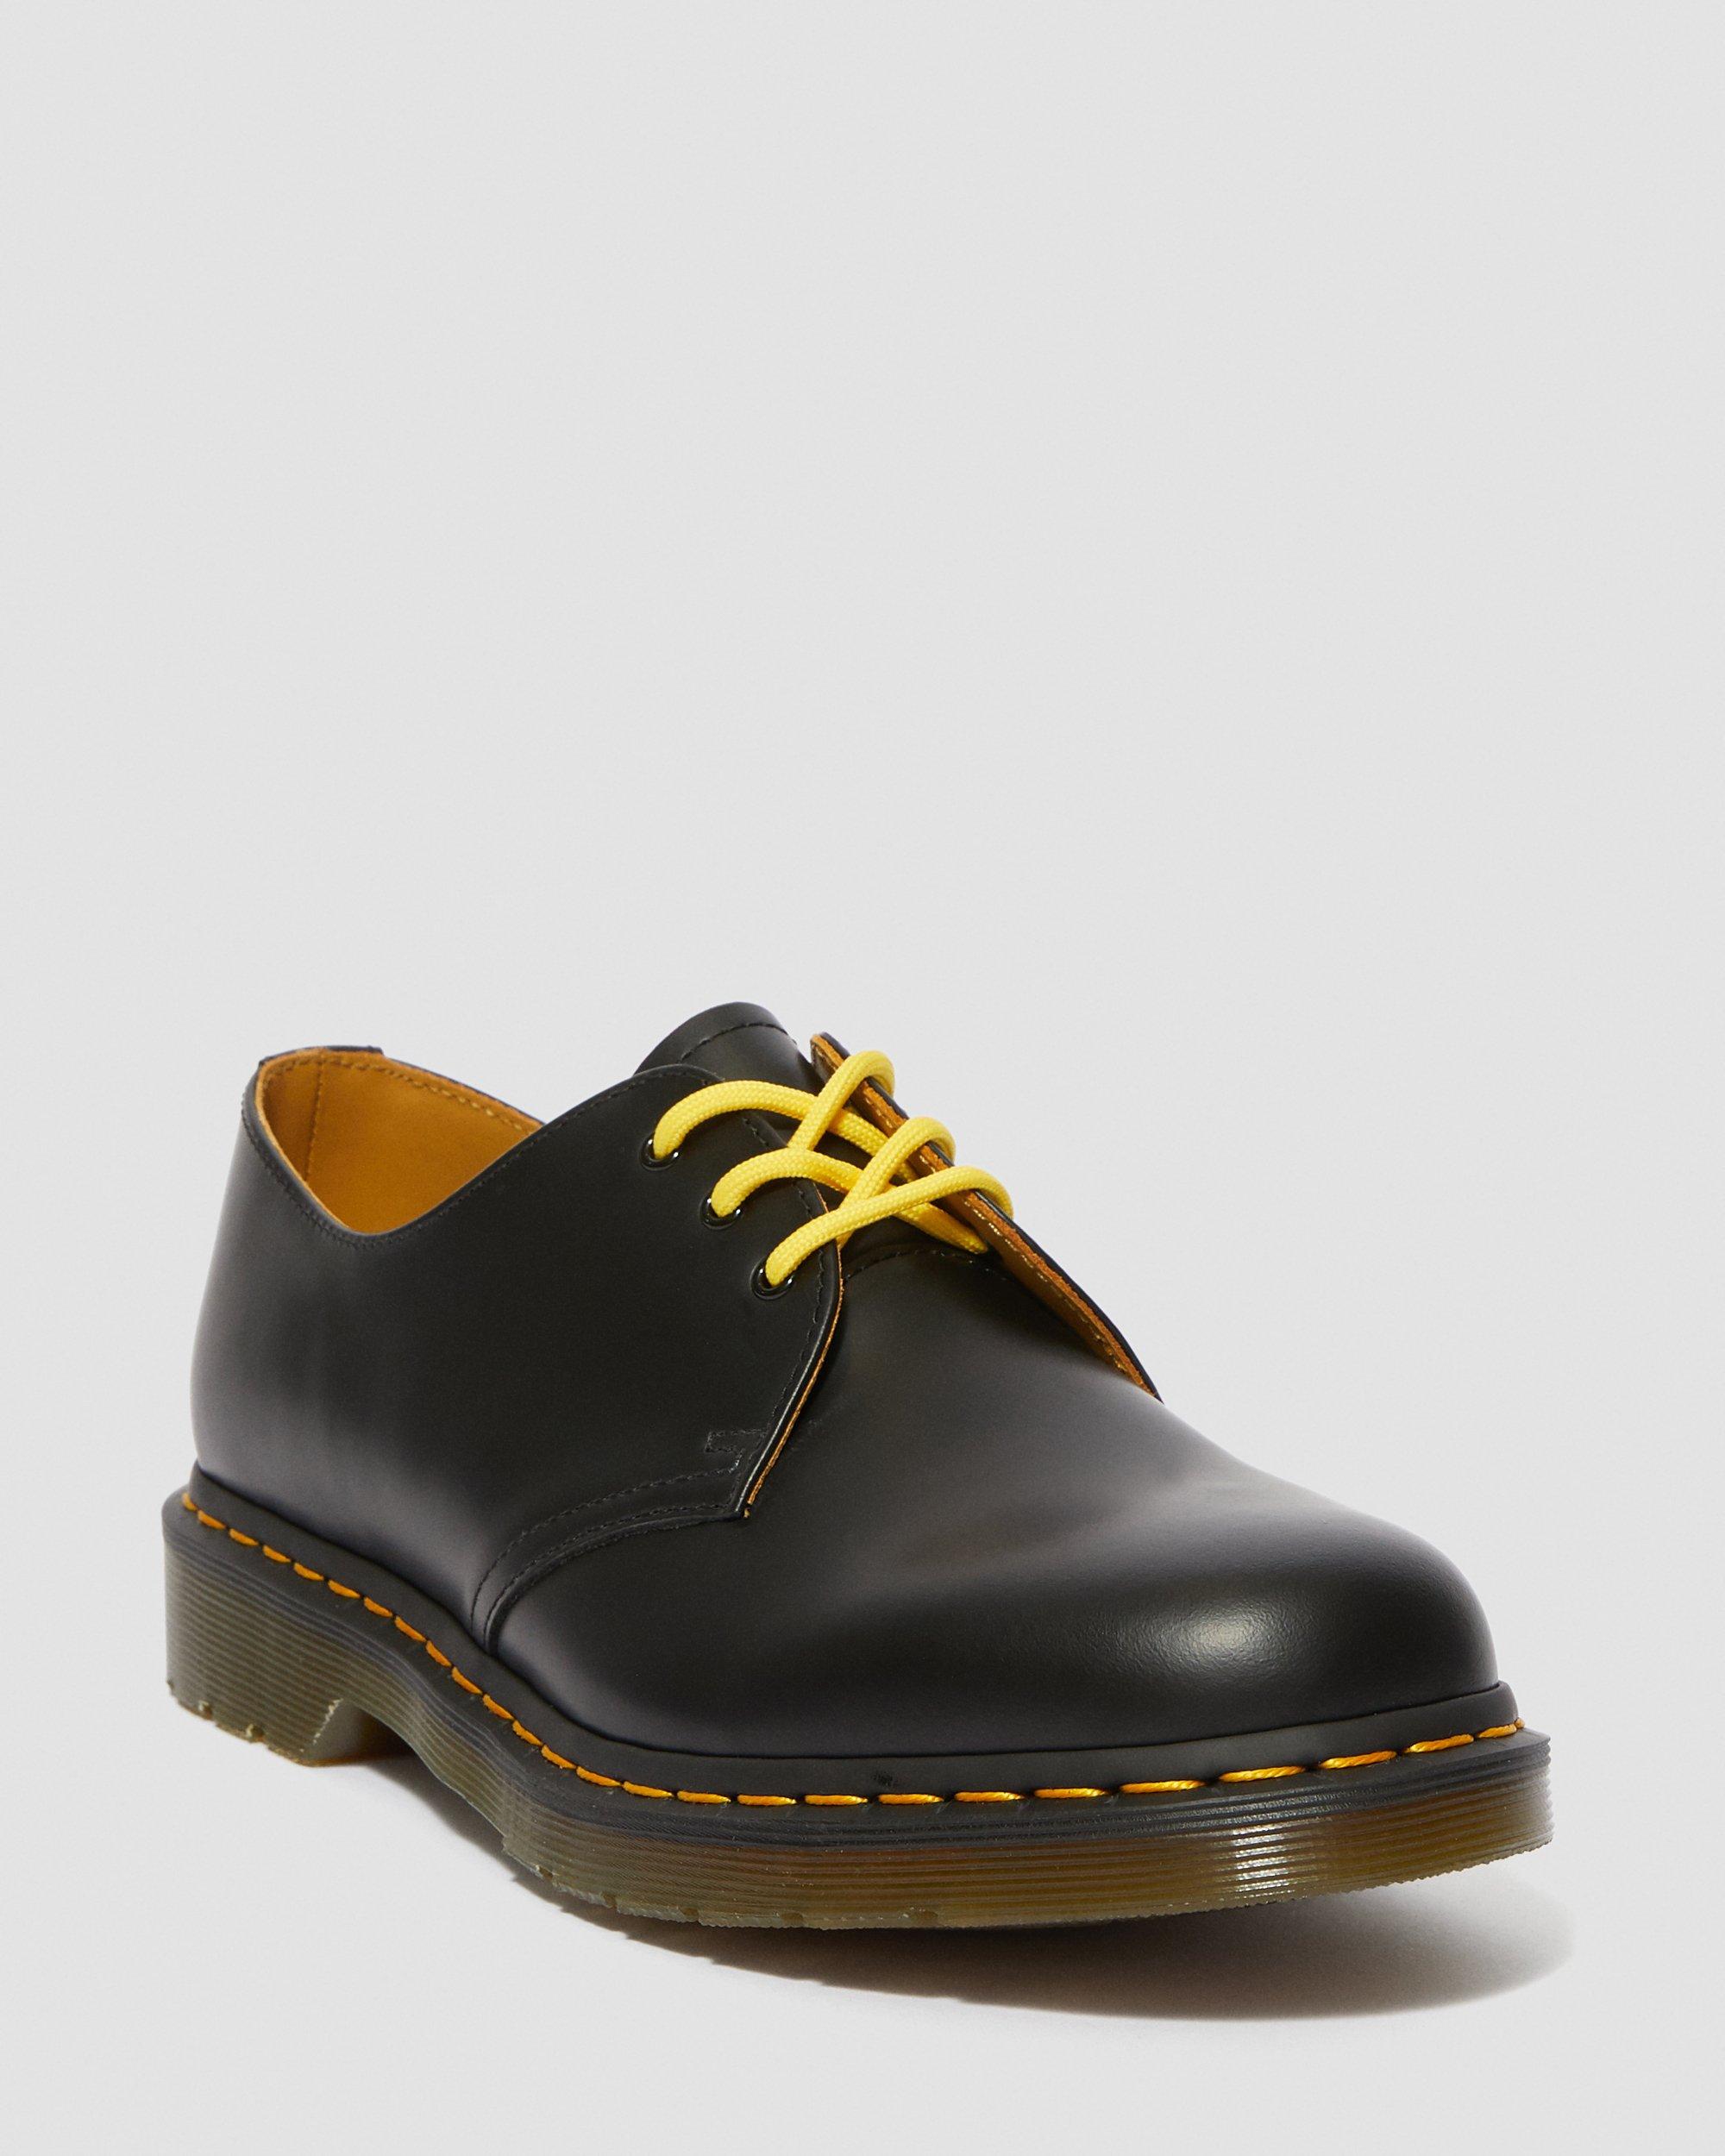 65cm 黃色圓形花邊鞋帶 (3孔鞋)